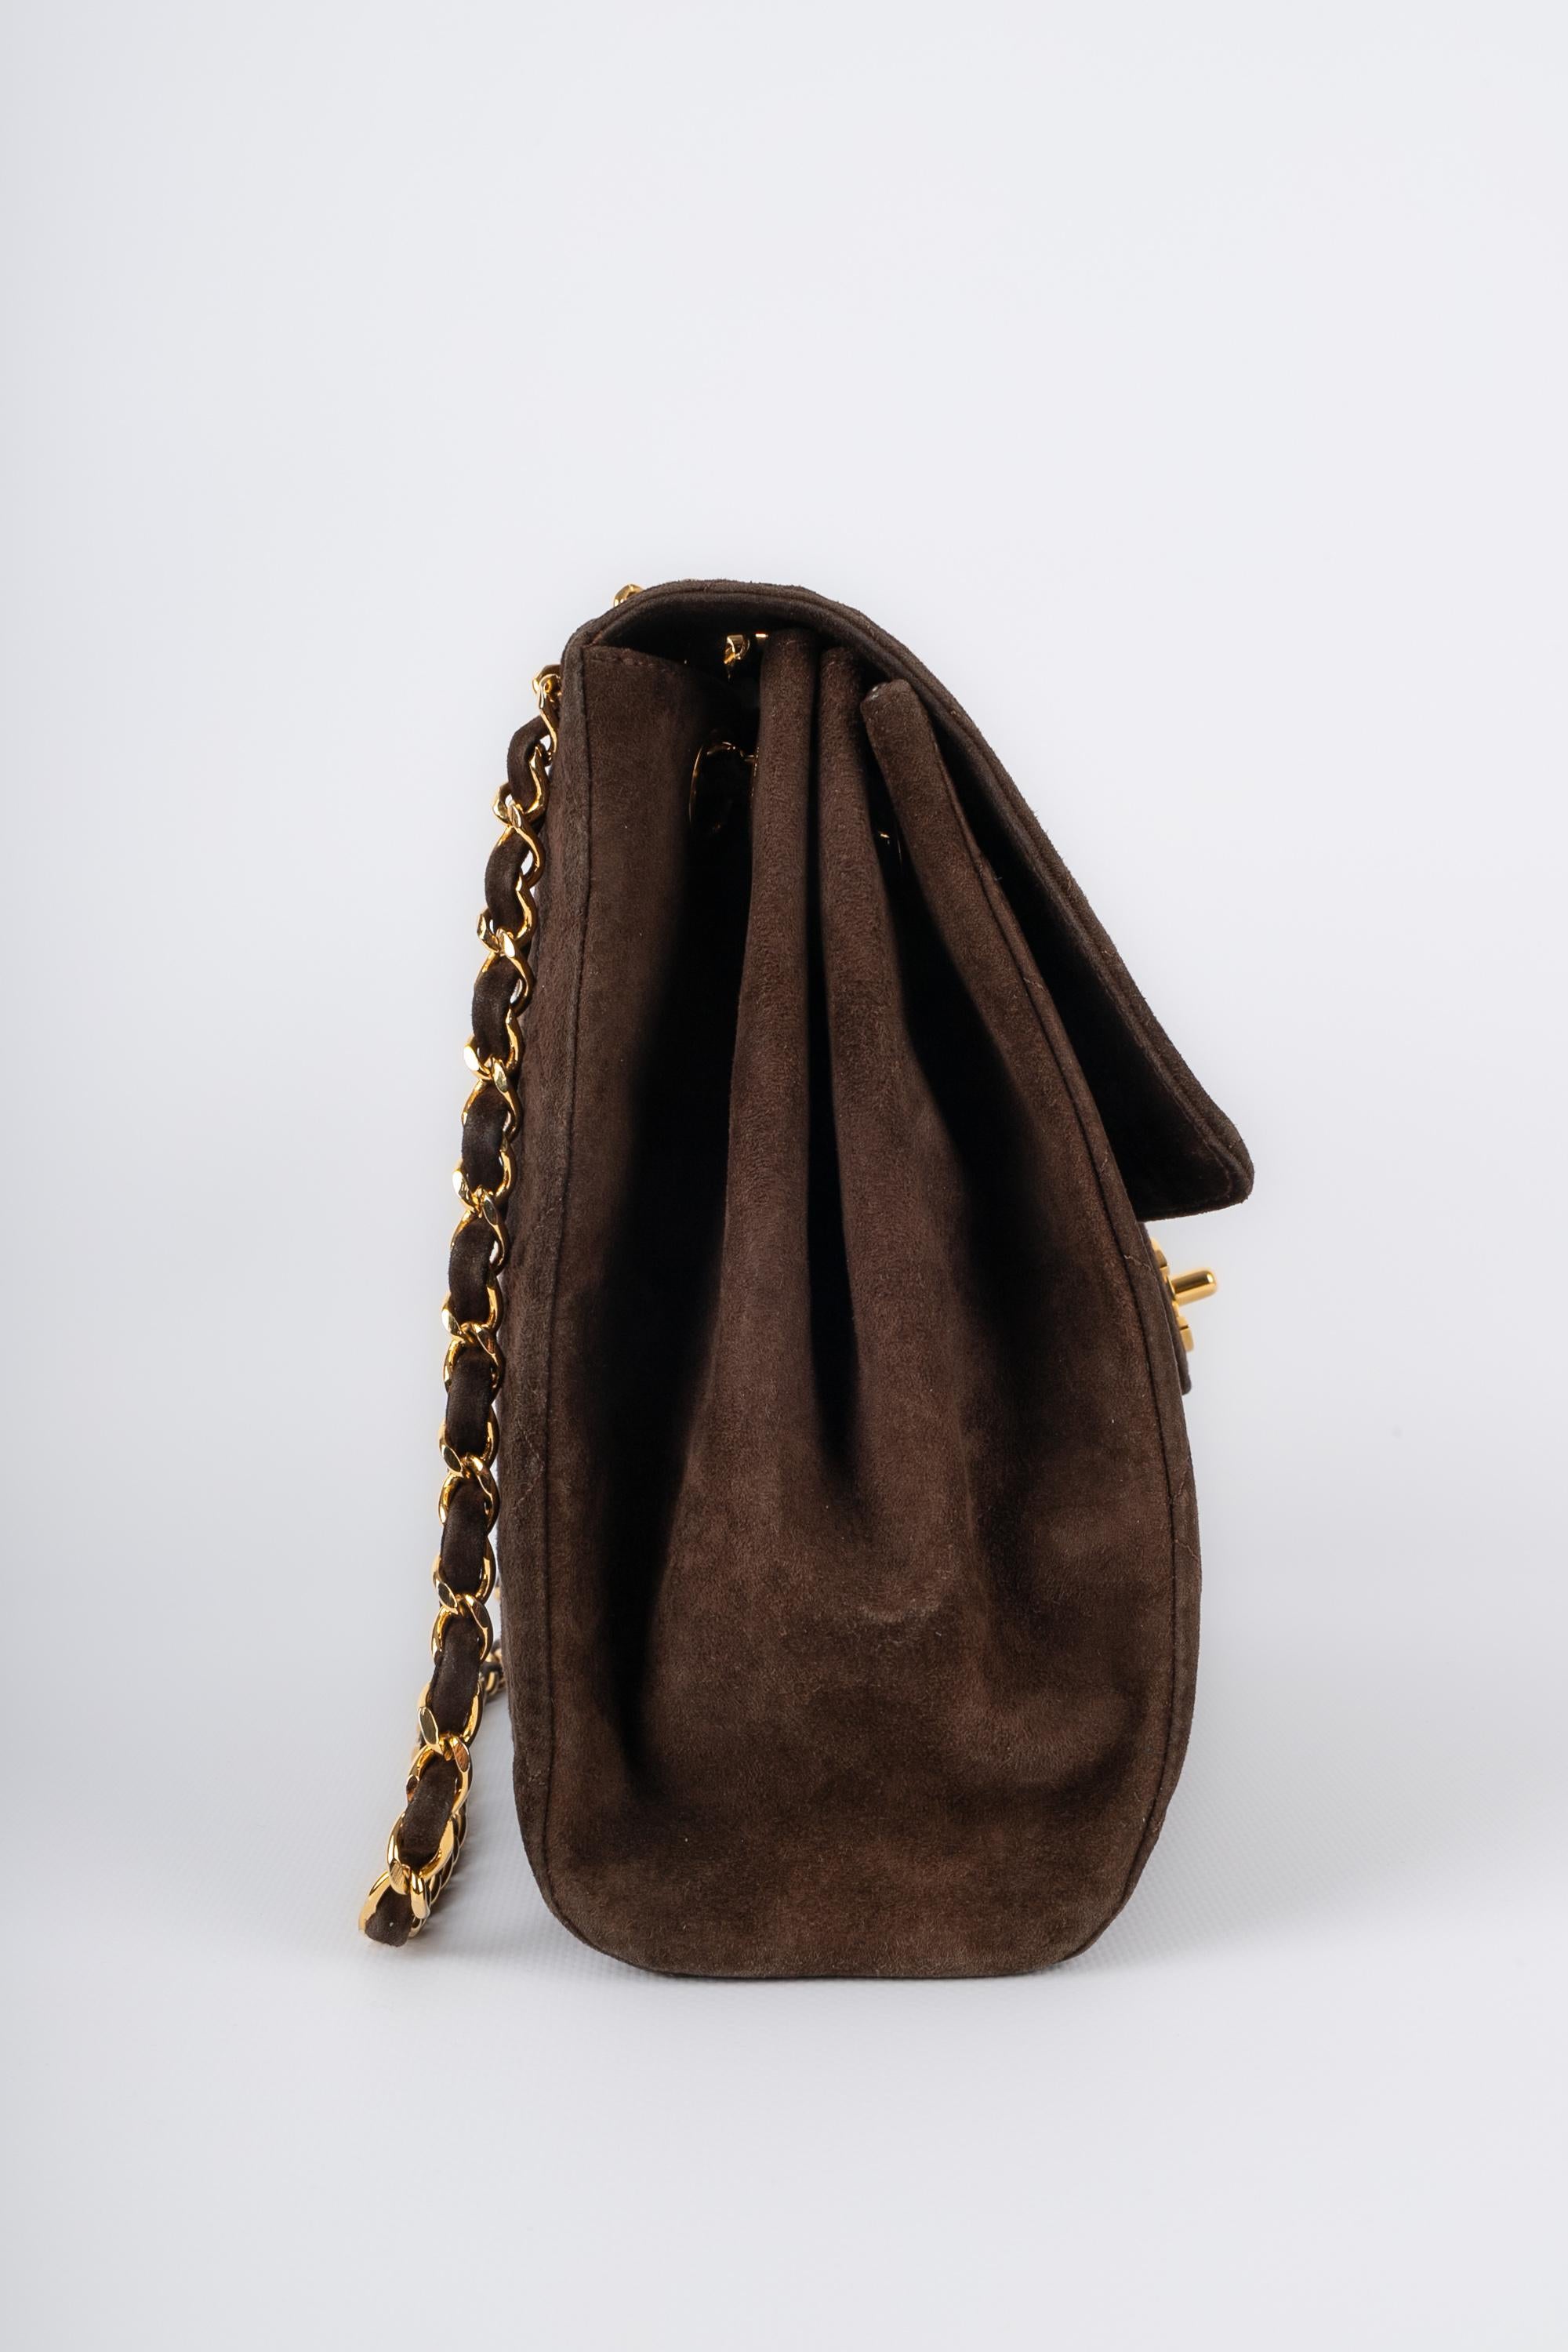 Women's or Men's Chanel bag 1989/1991